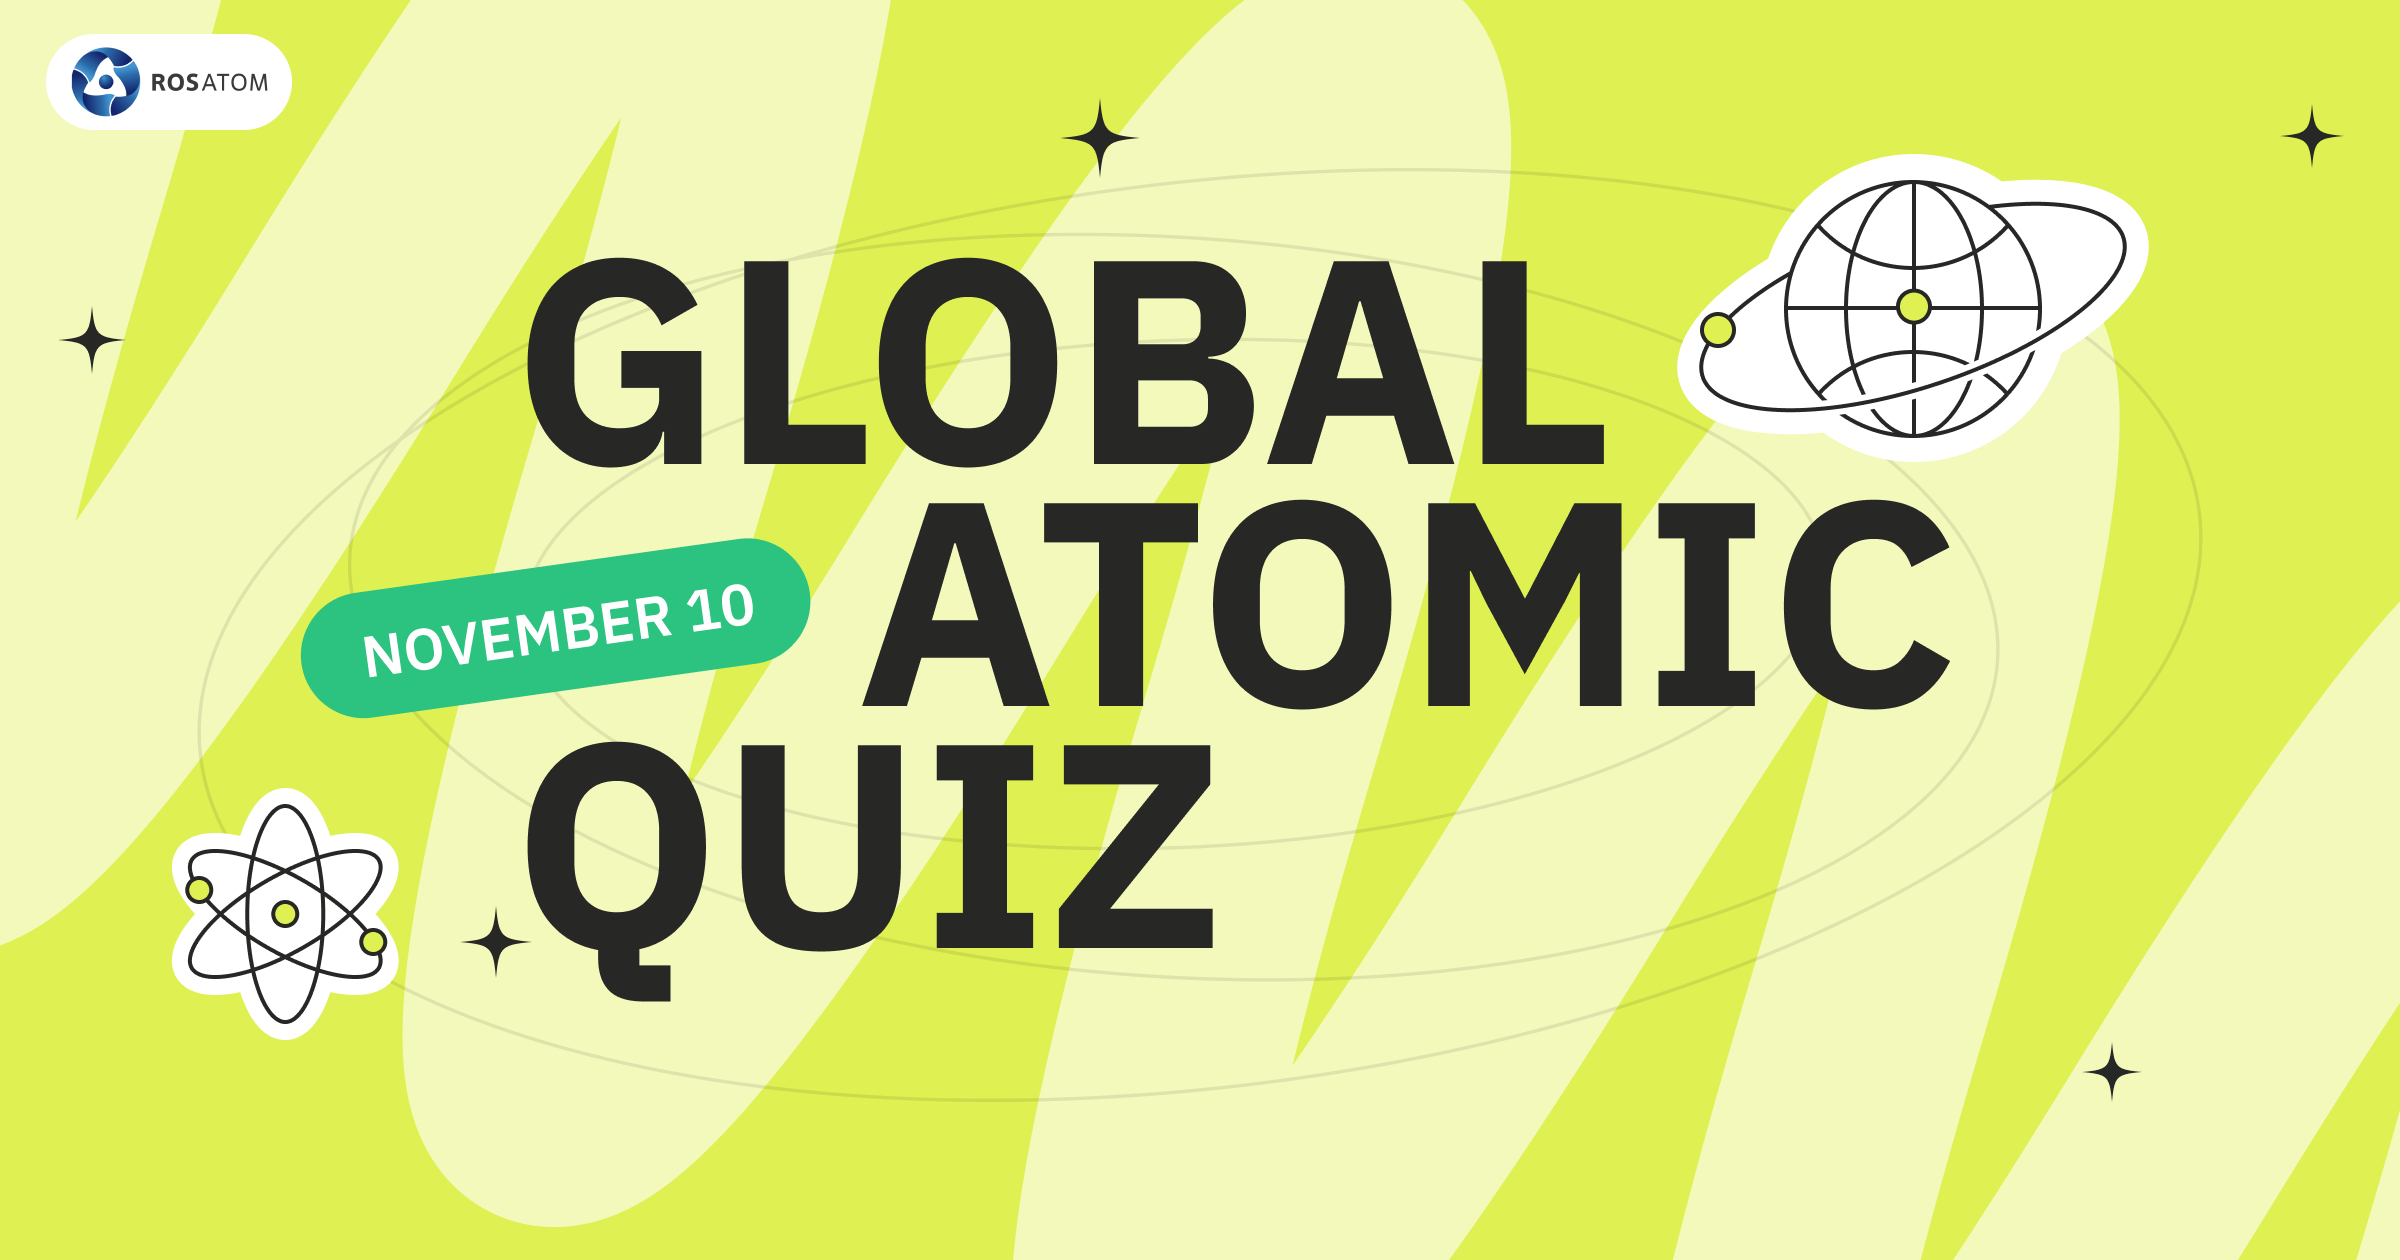 ROSATOM Launches Global Atomic Quiz Celebrating World Science Day on 10 November